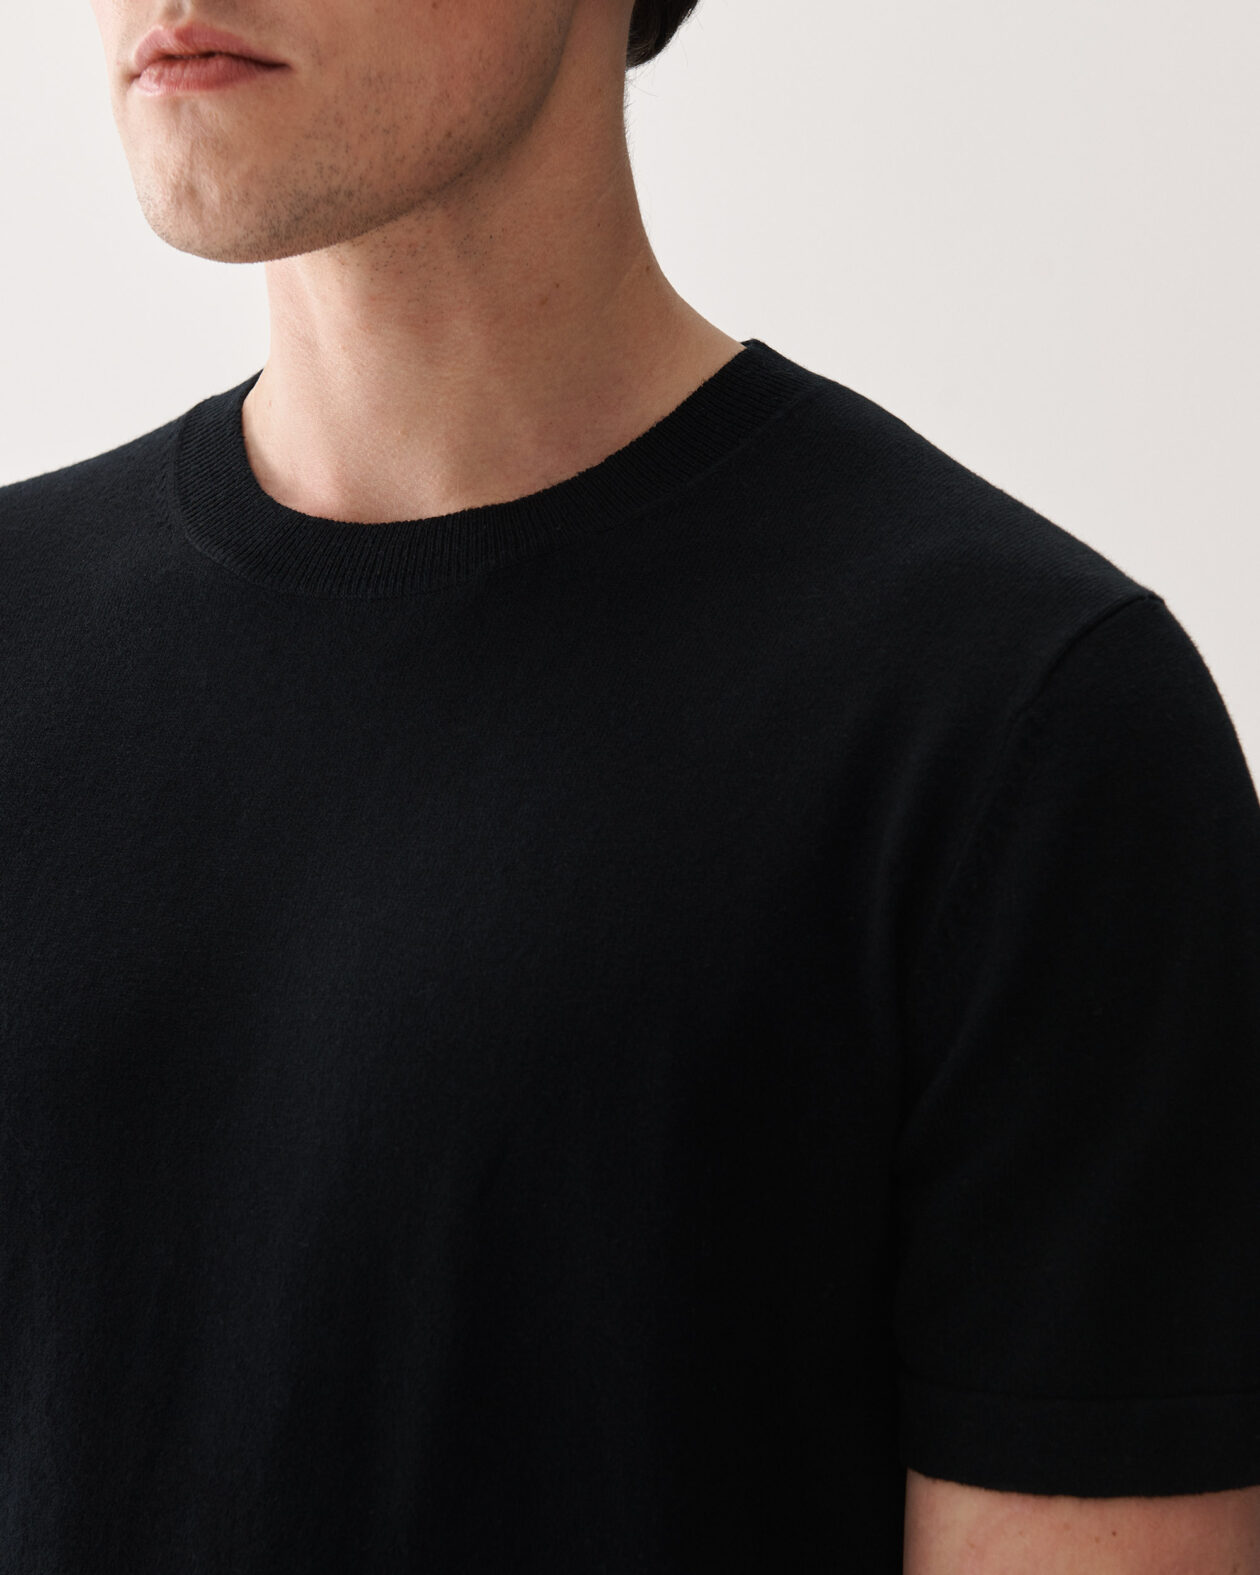 T-Shirt Merino Cotton Black